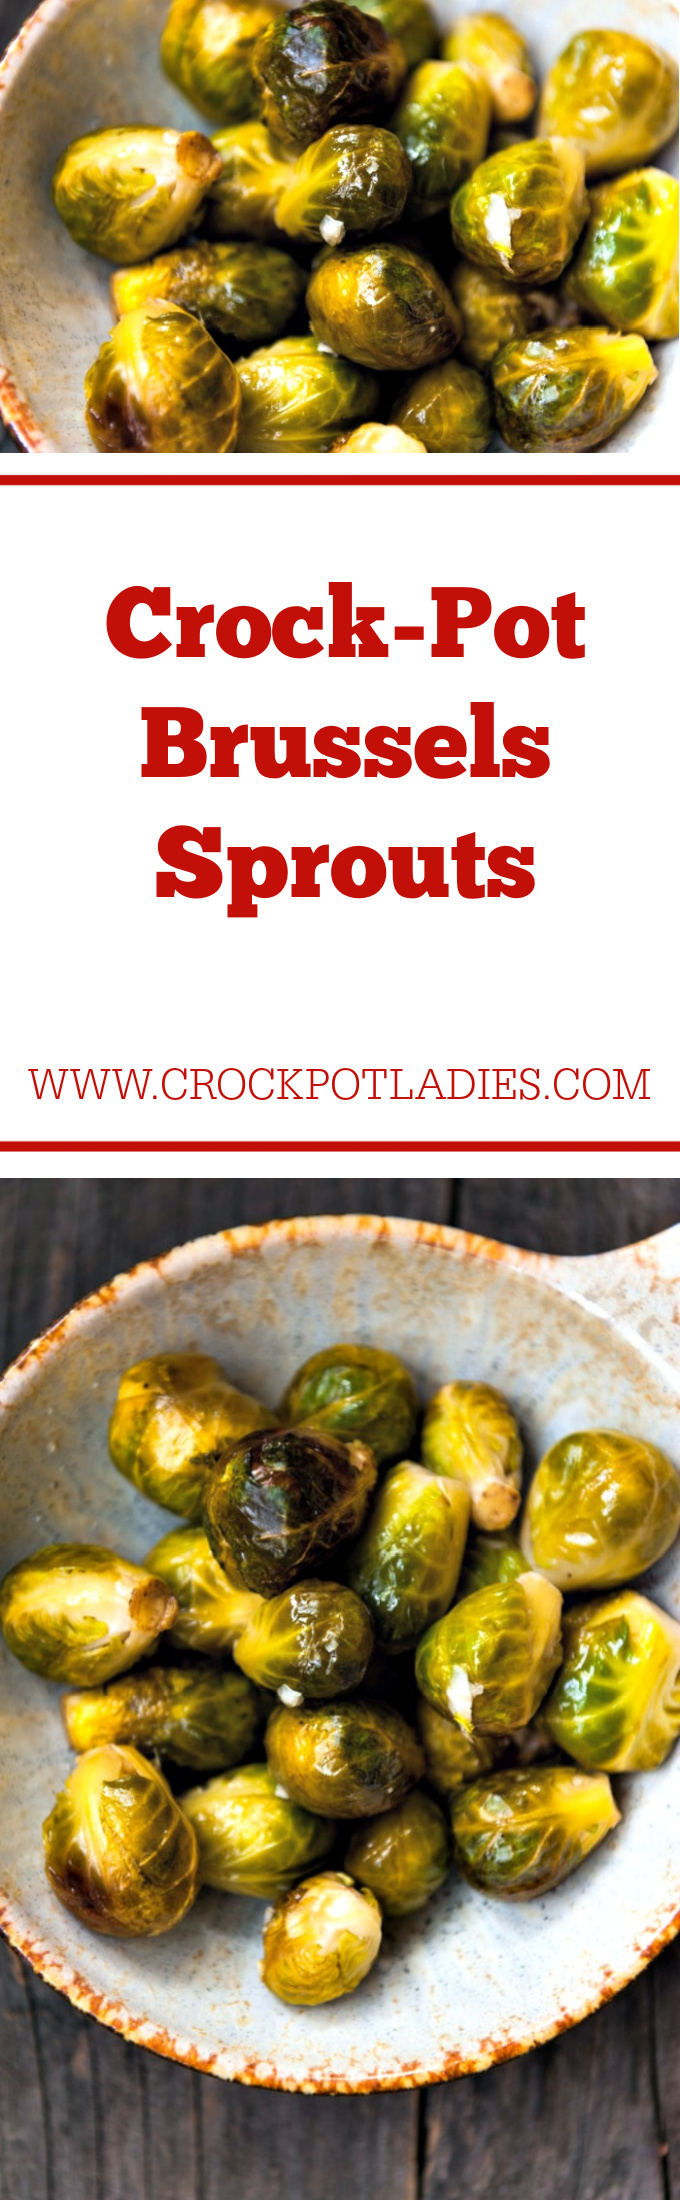 Crock-Pot Brussels Sprouts